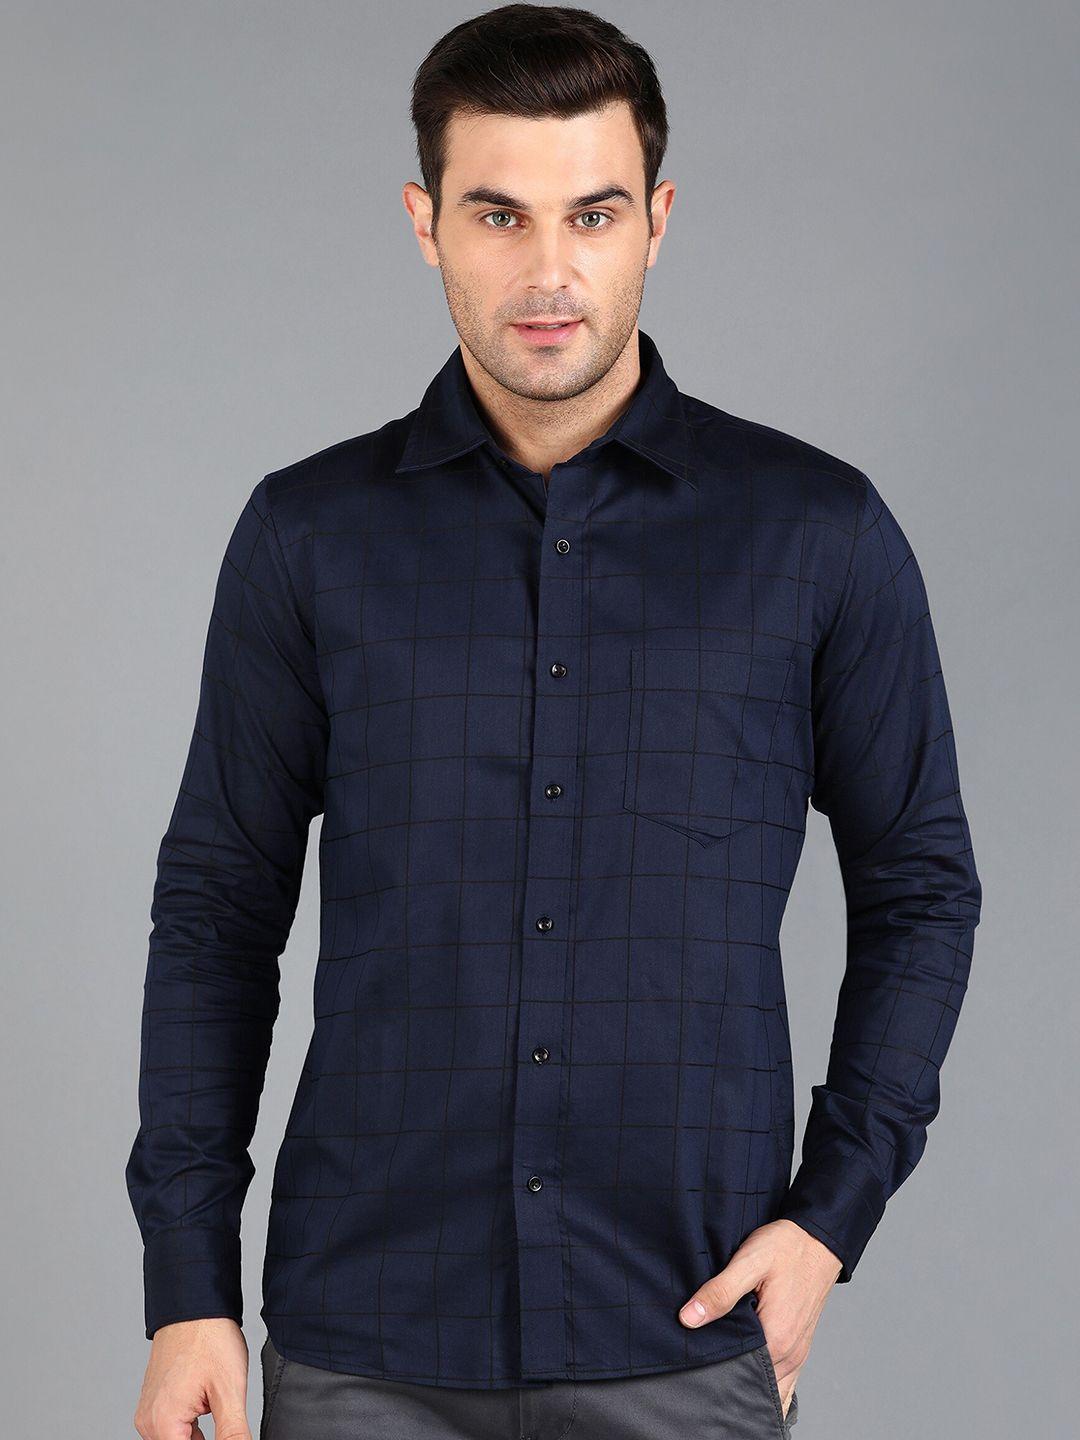 znx clothing men blue premium slim fit opaque checked formal shirt